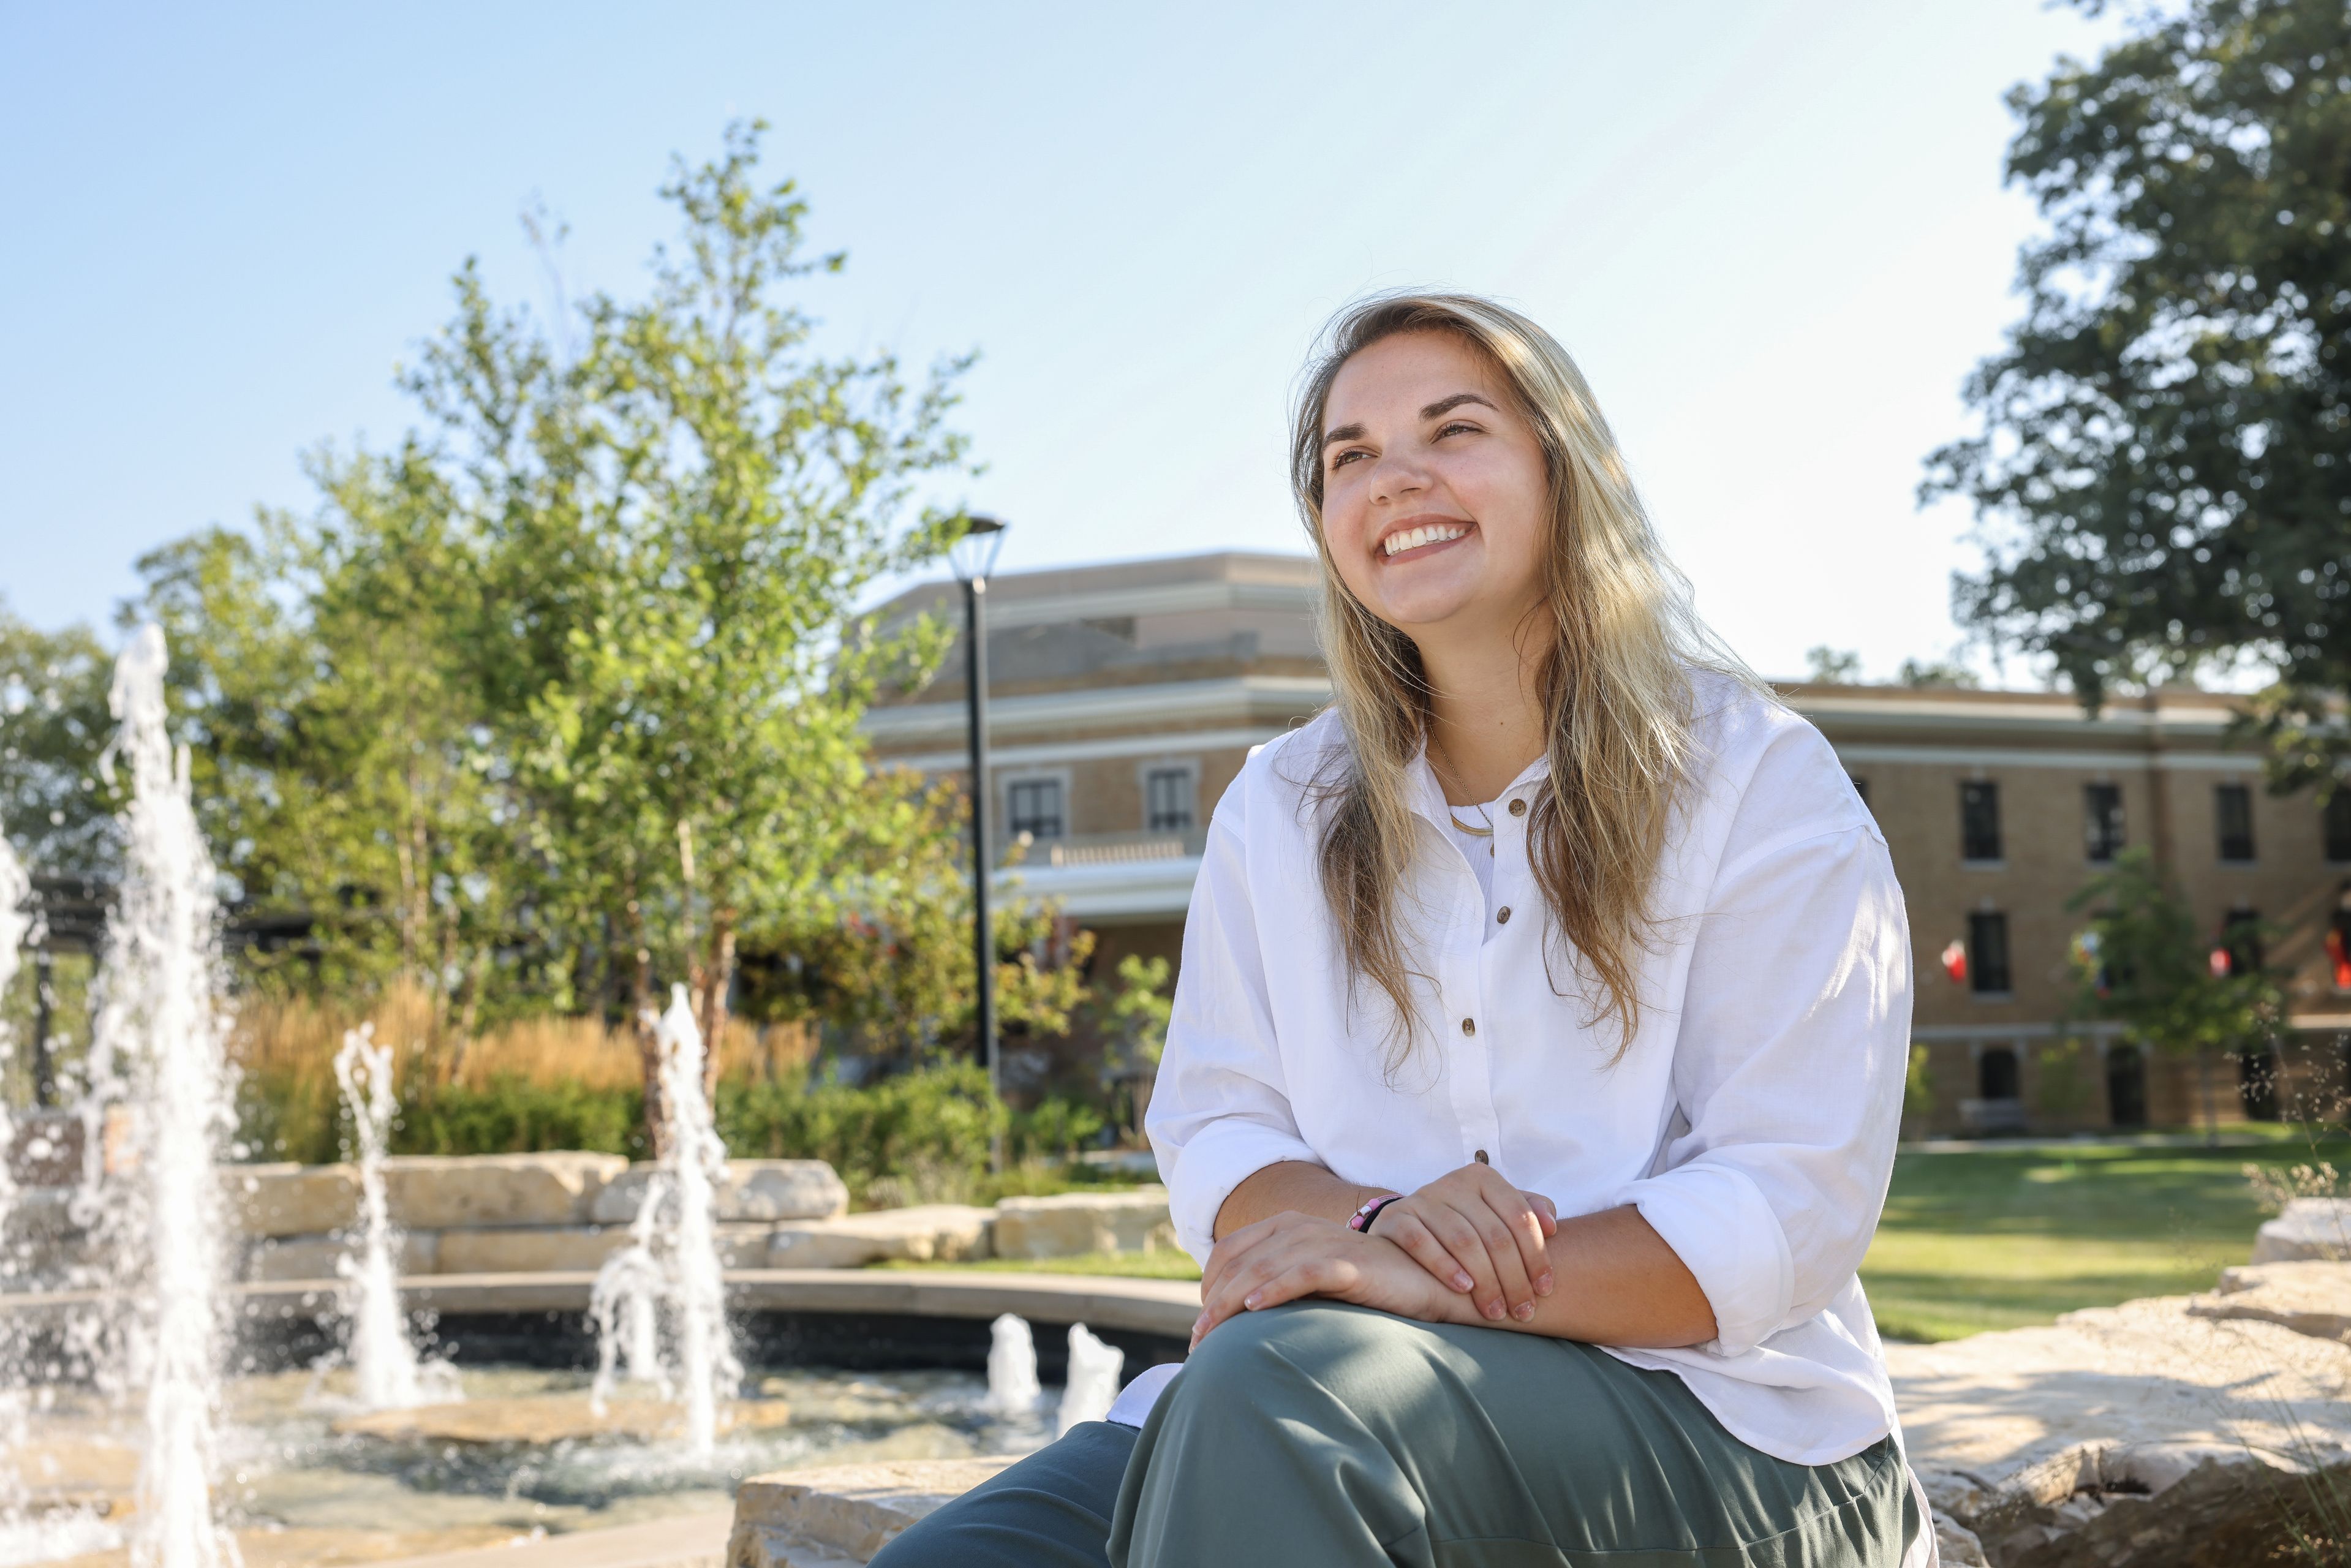 Karlee Augustus smiles as she sits on campus.